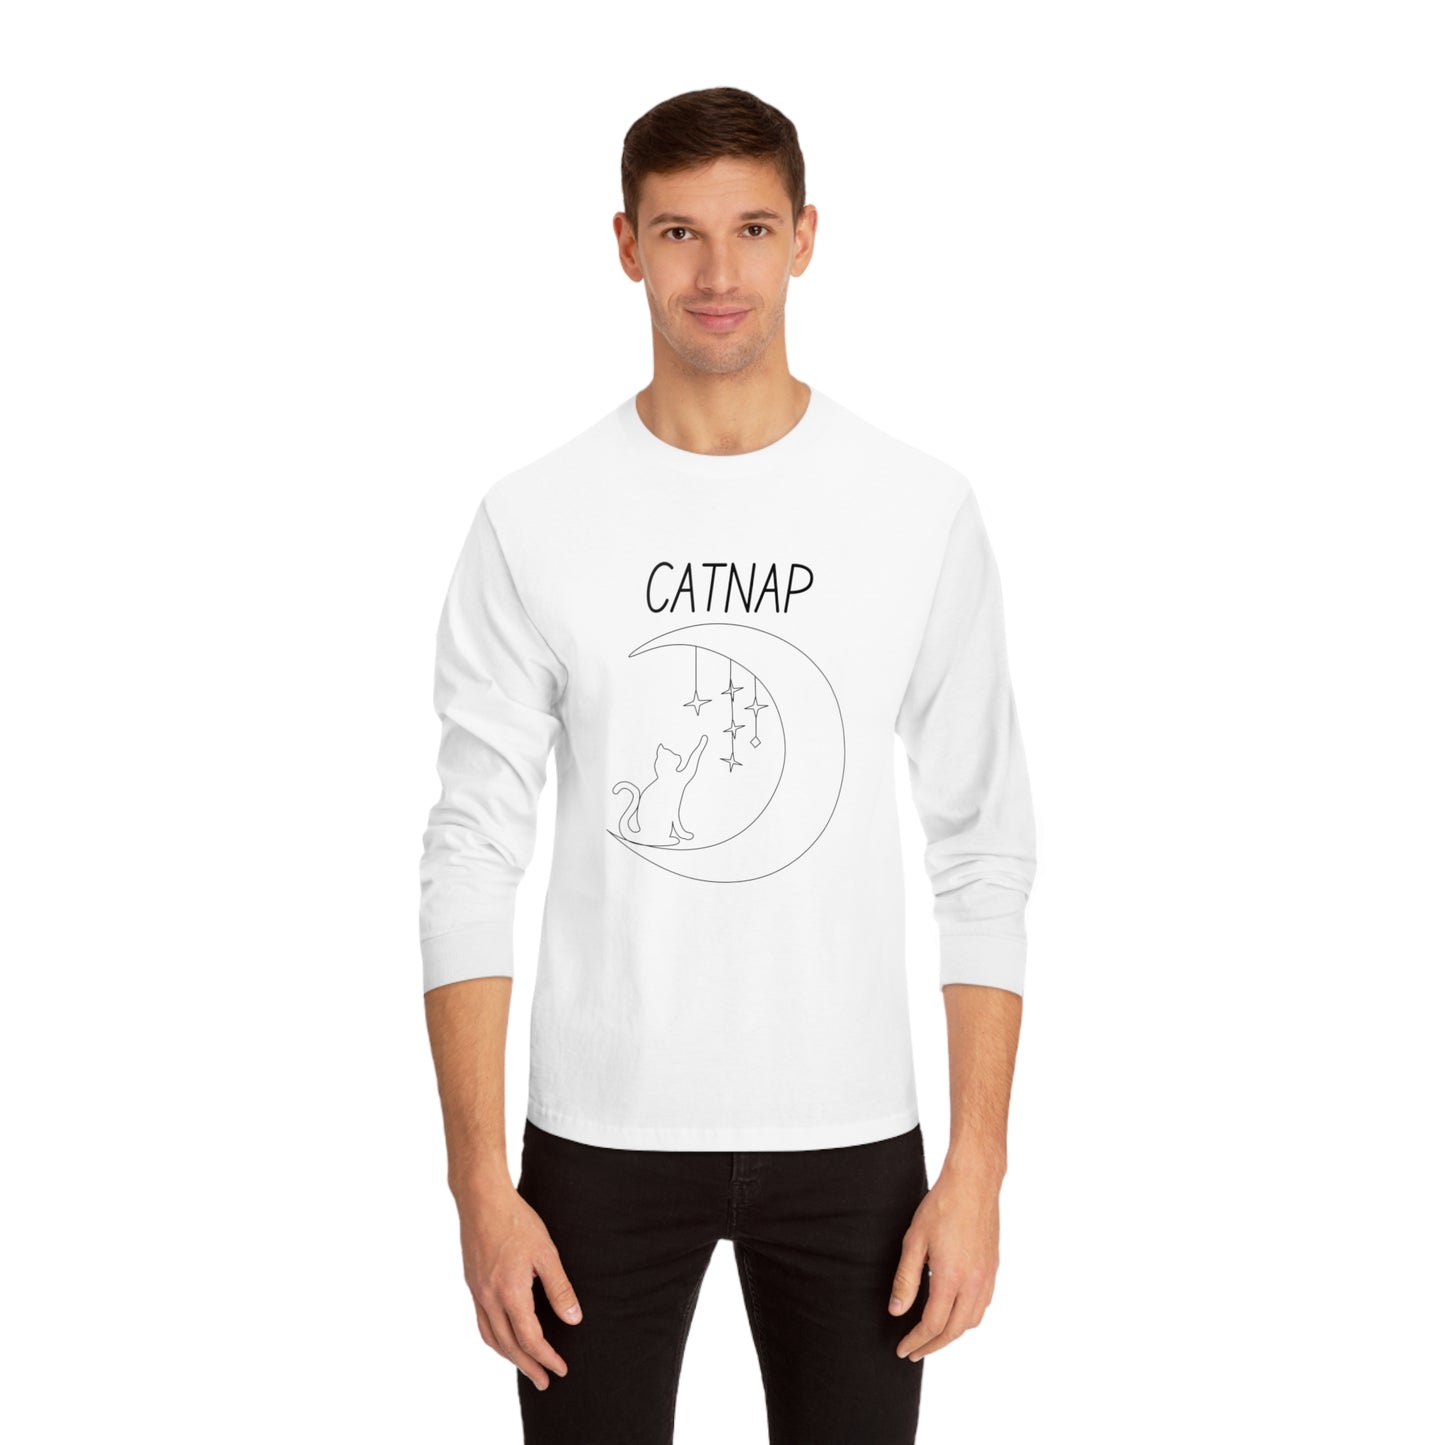 CatNap: Long Sleeve T-Shirt